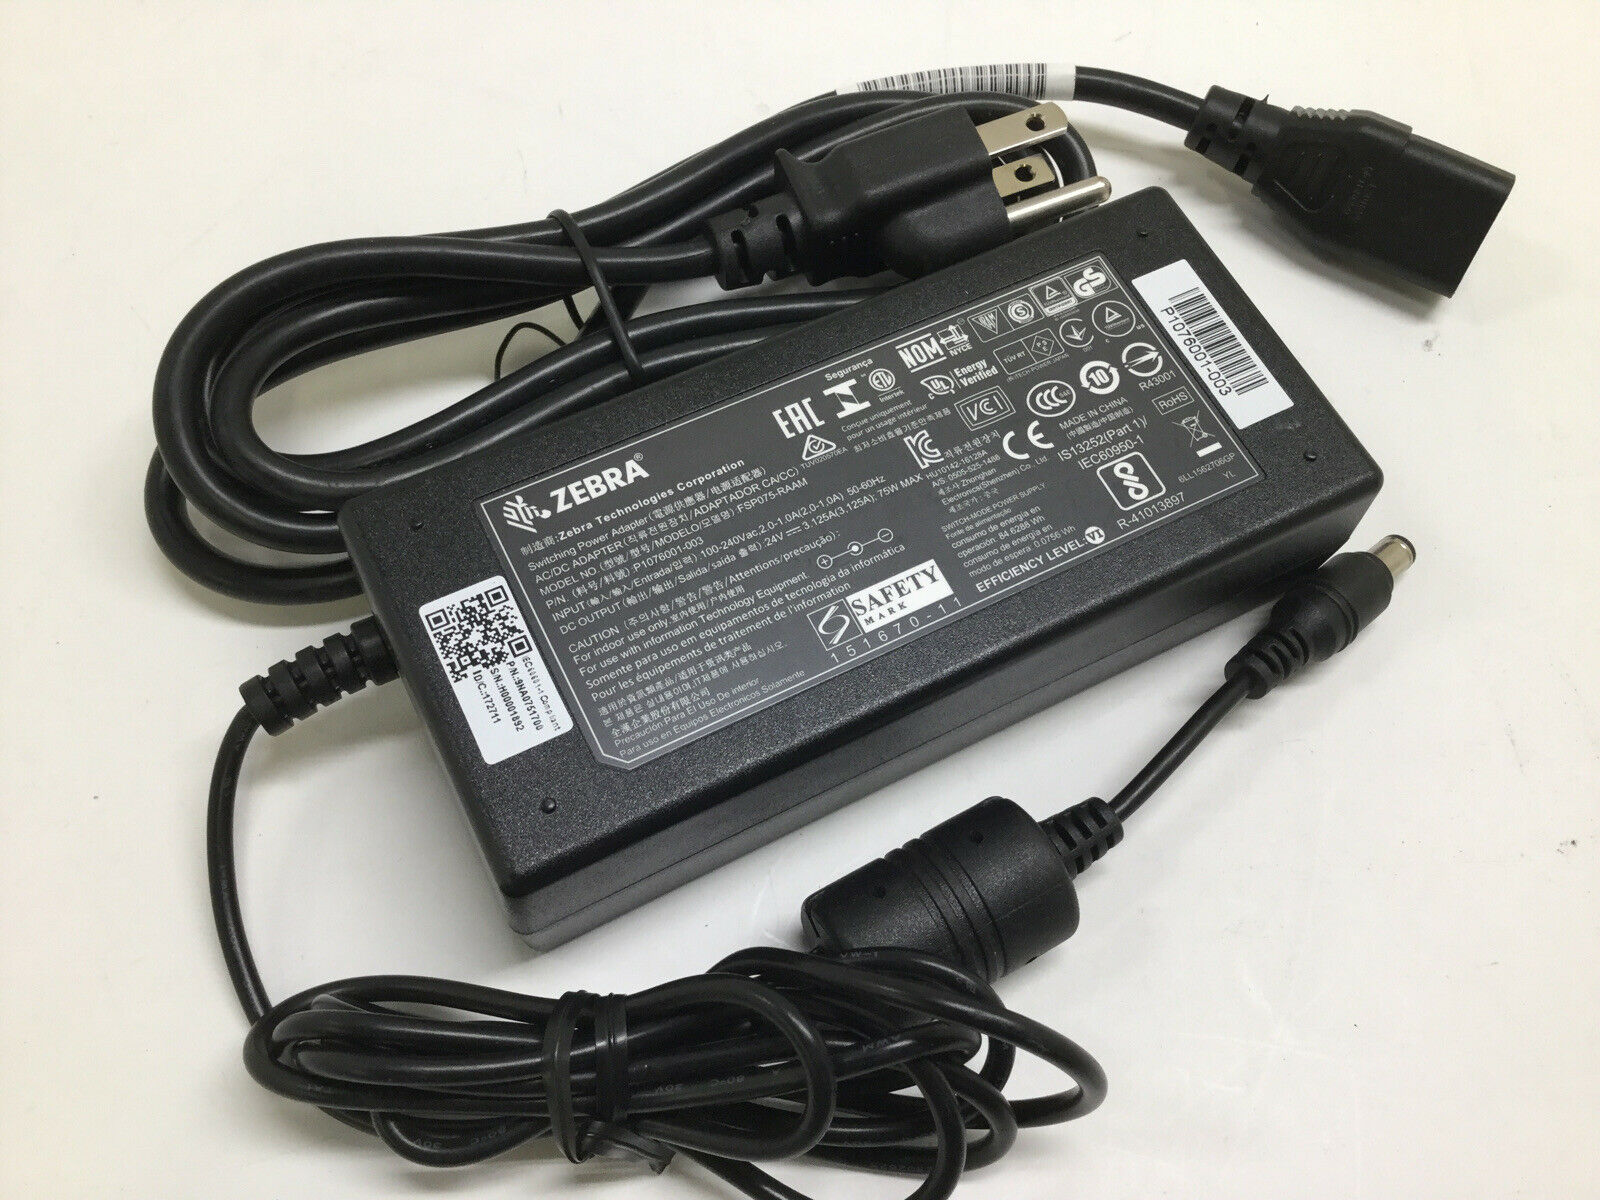 NEW ZEBRA FSP075-RAAM P1076001-003 AC Adapter Power Supply 24V 3.125A 75W Compatible Brand: ZEBRA Color: Black Maximum